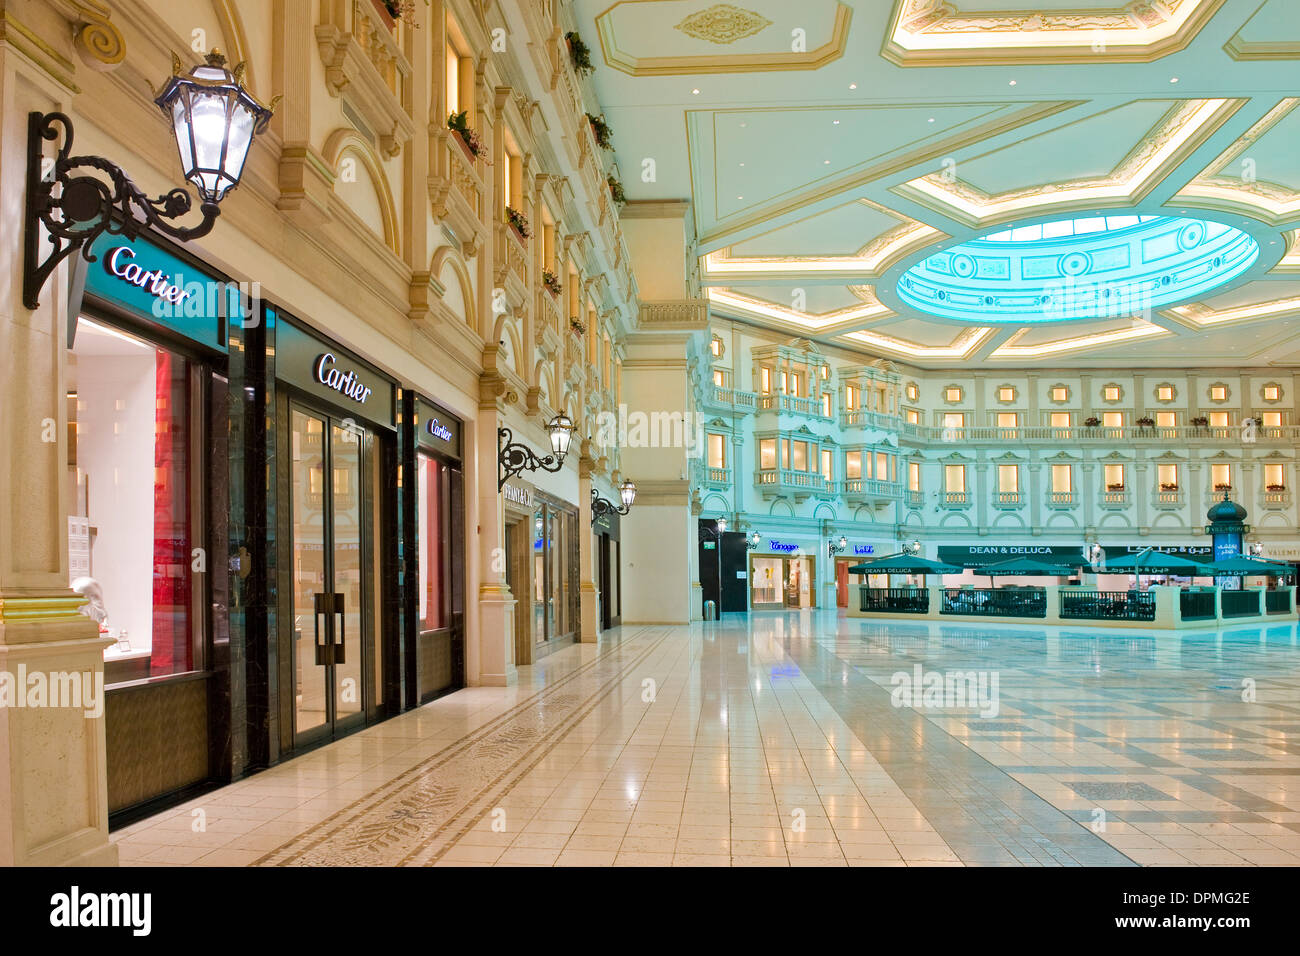 Qatar, Doha, Villaggio shopping mall 